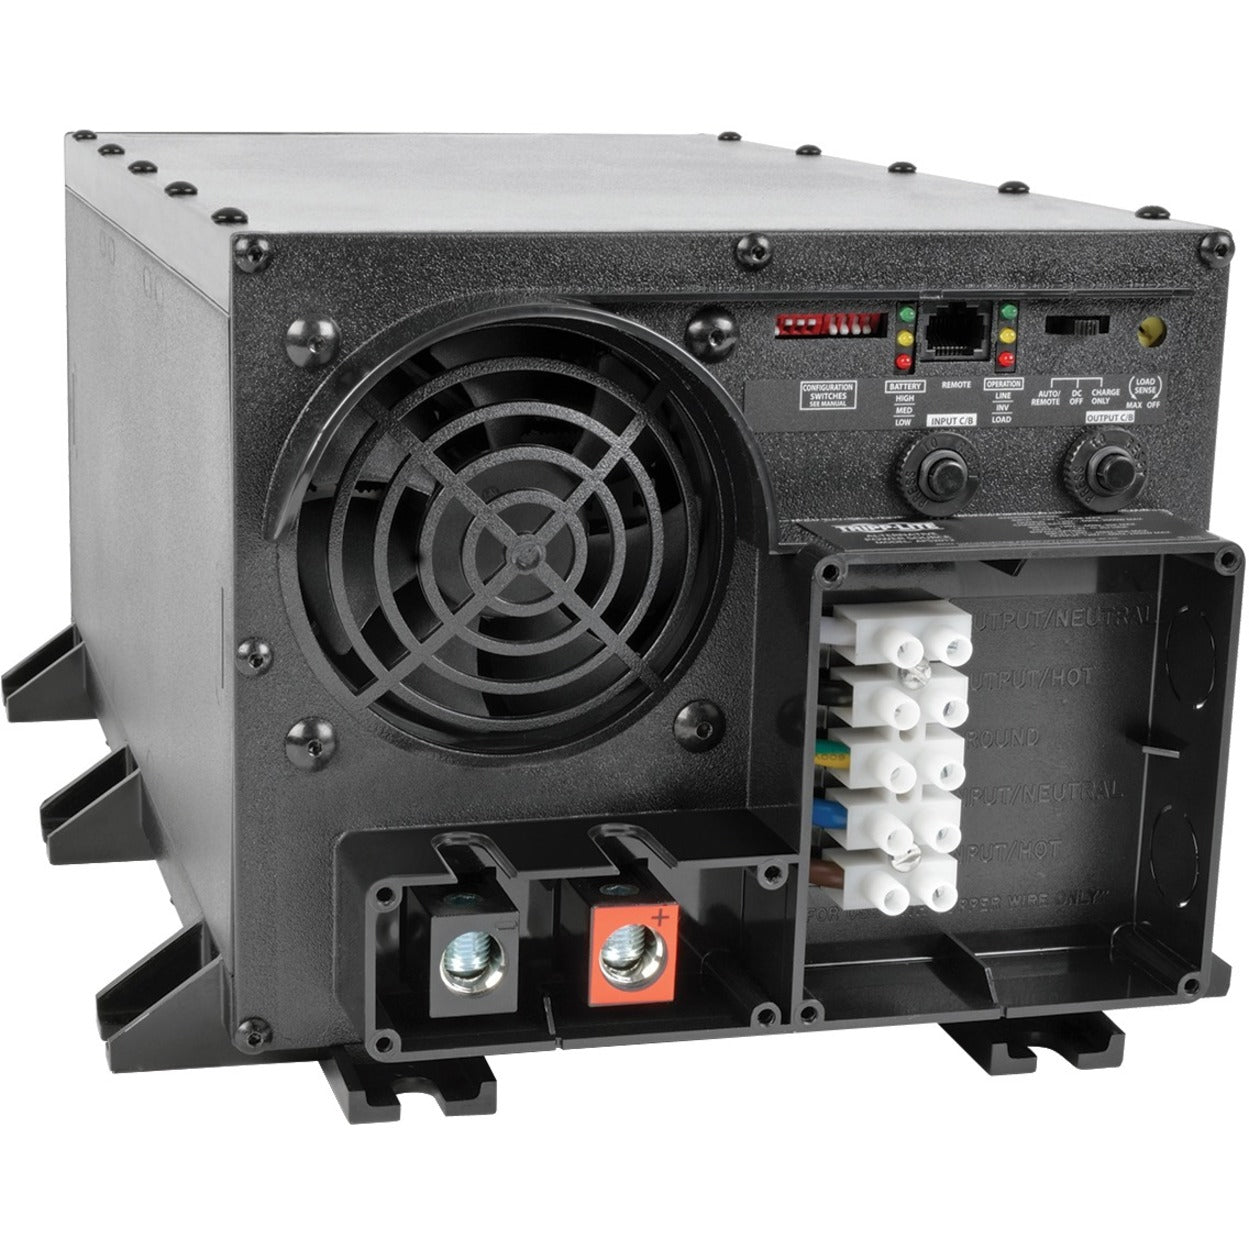 Tripp Lite APS2424 PowerVerter APS DC-to-AC Inverter, 2400W Continuous/4800W Peak